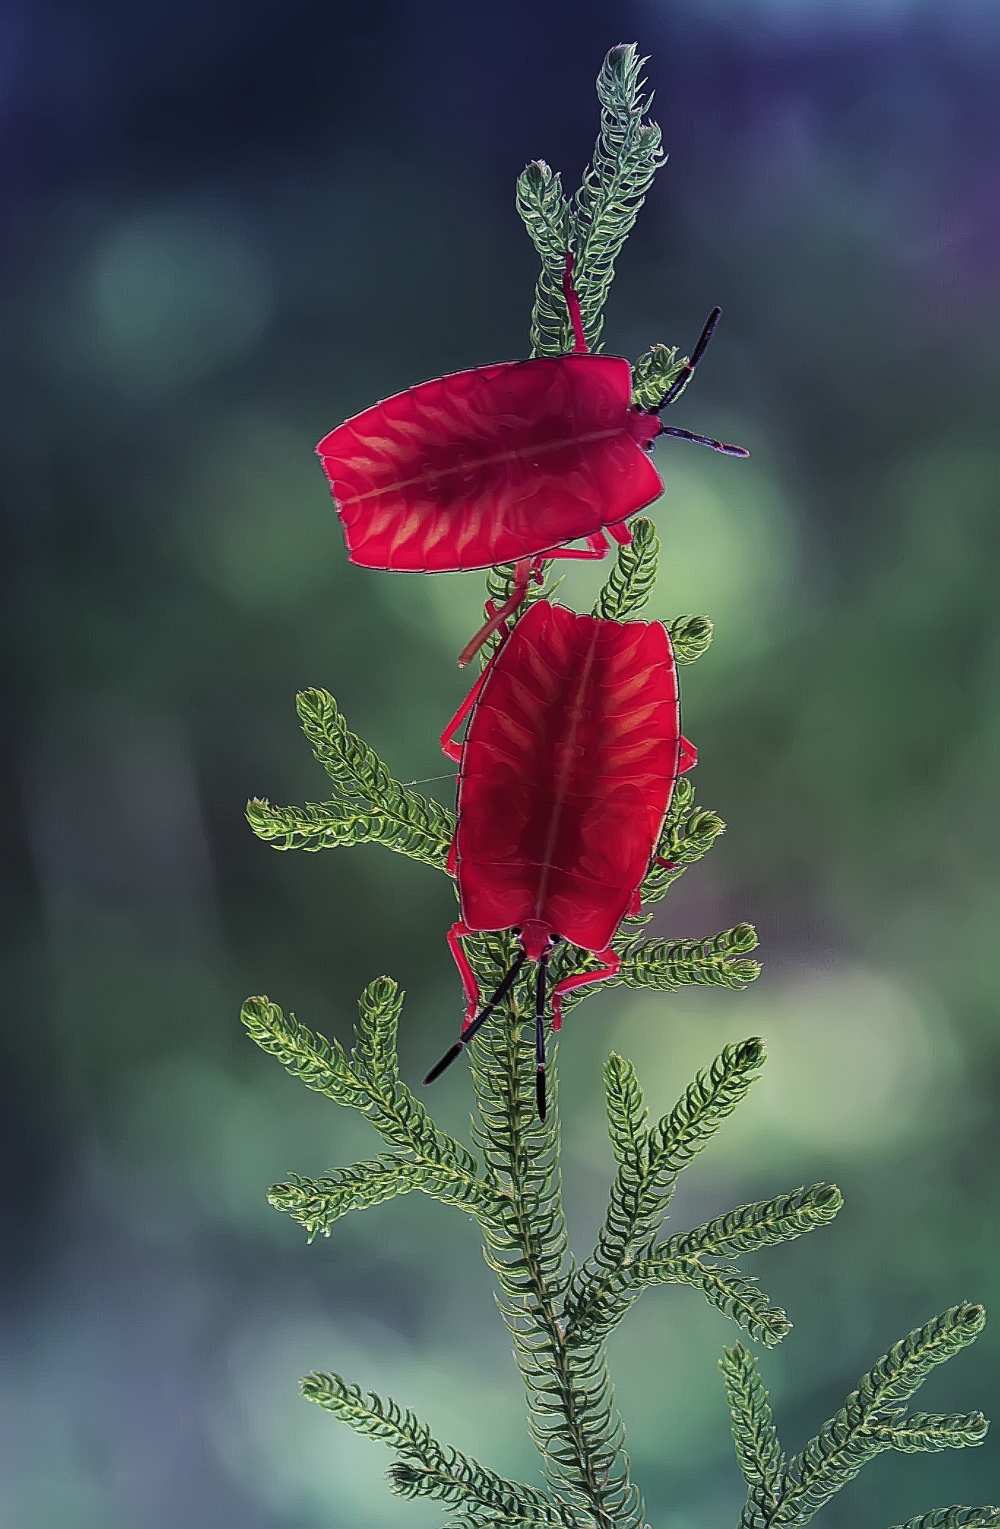 Red Ladybug od Abdul Gapur Dayak